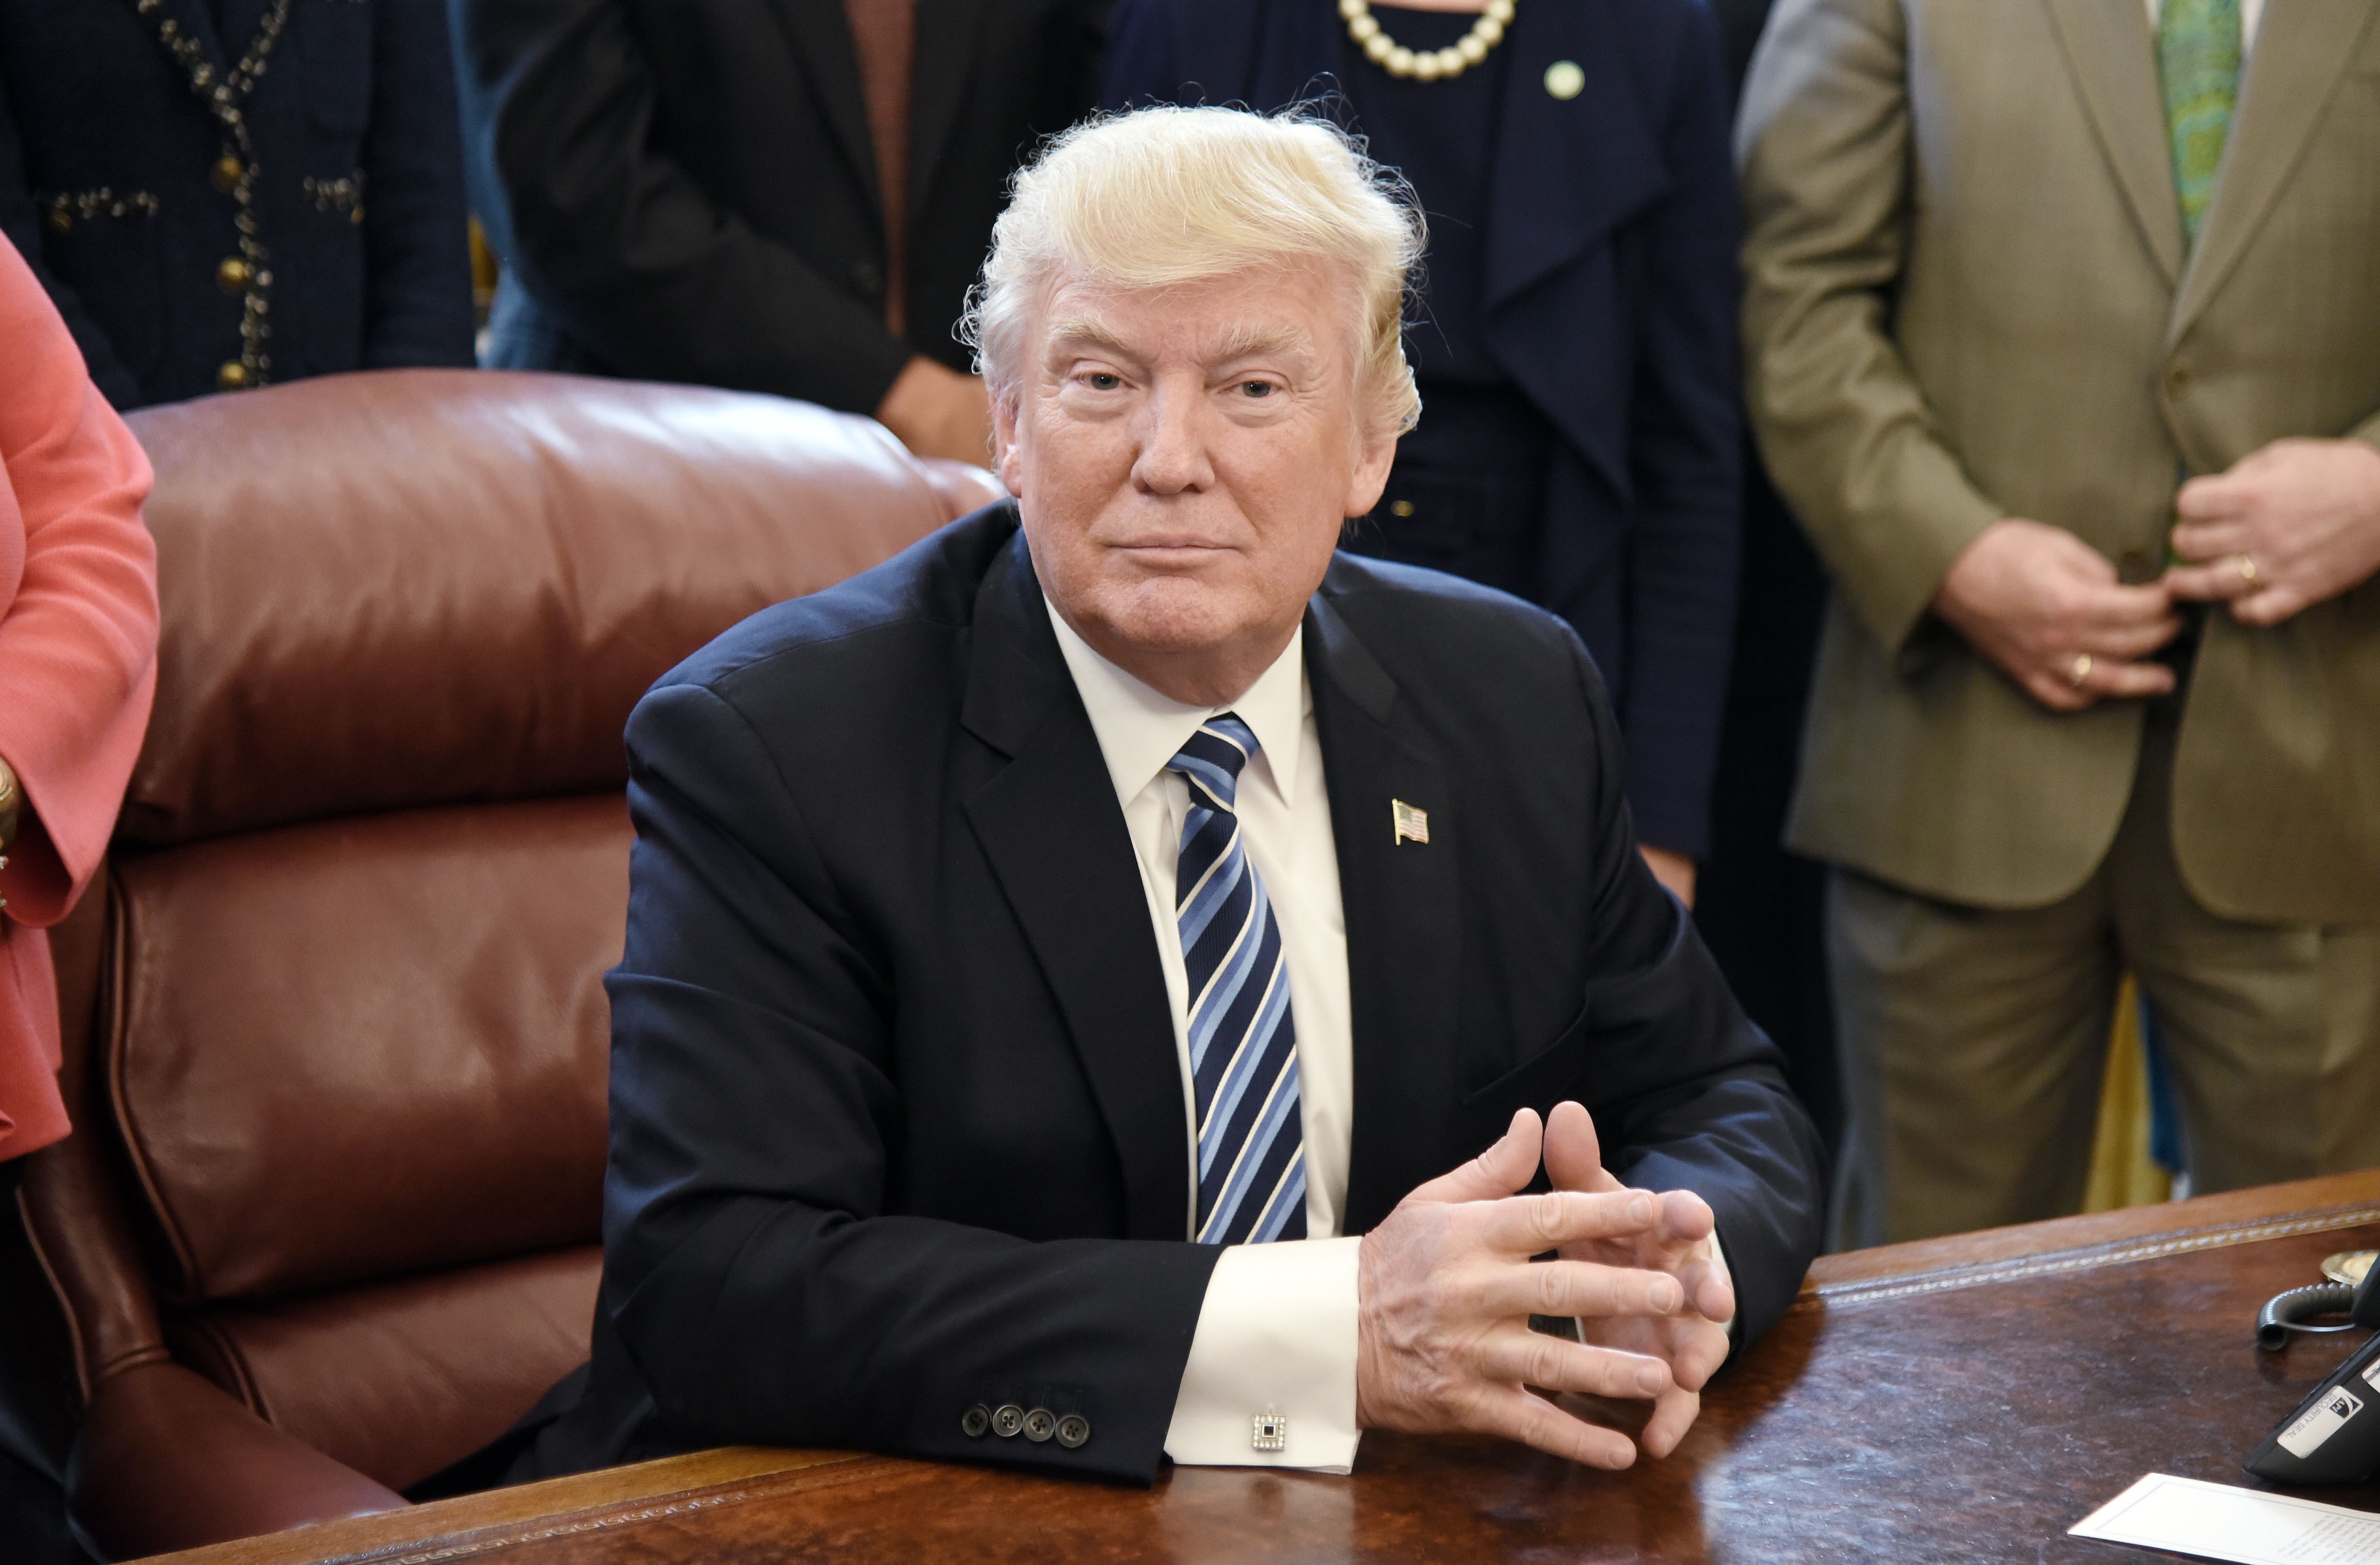 President Trump Signs Aluminum Imports Memorandum At The White House